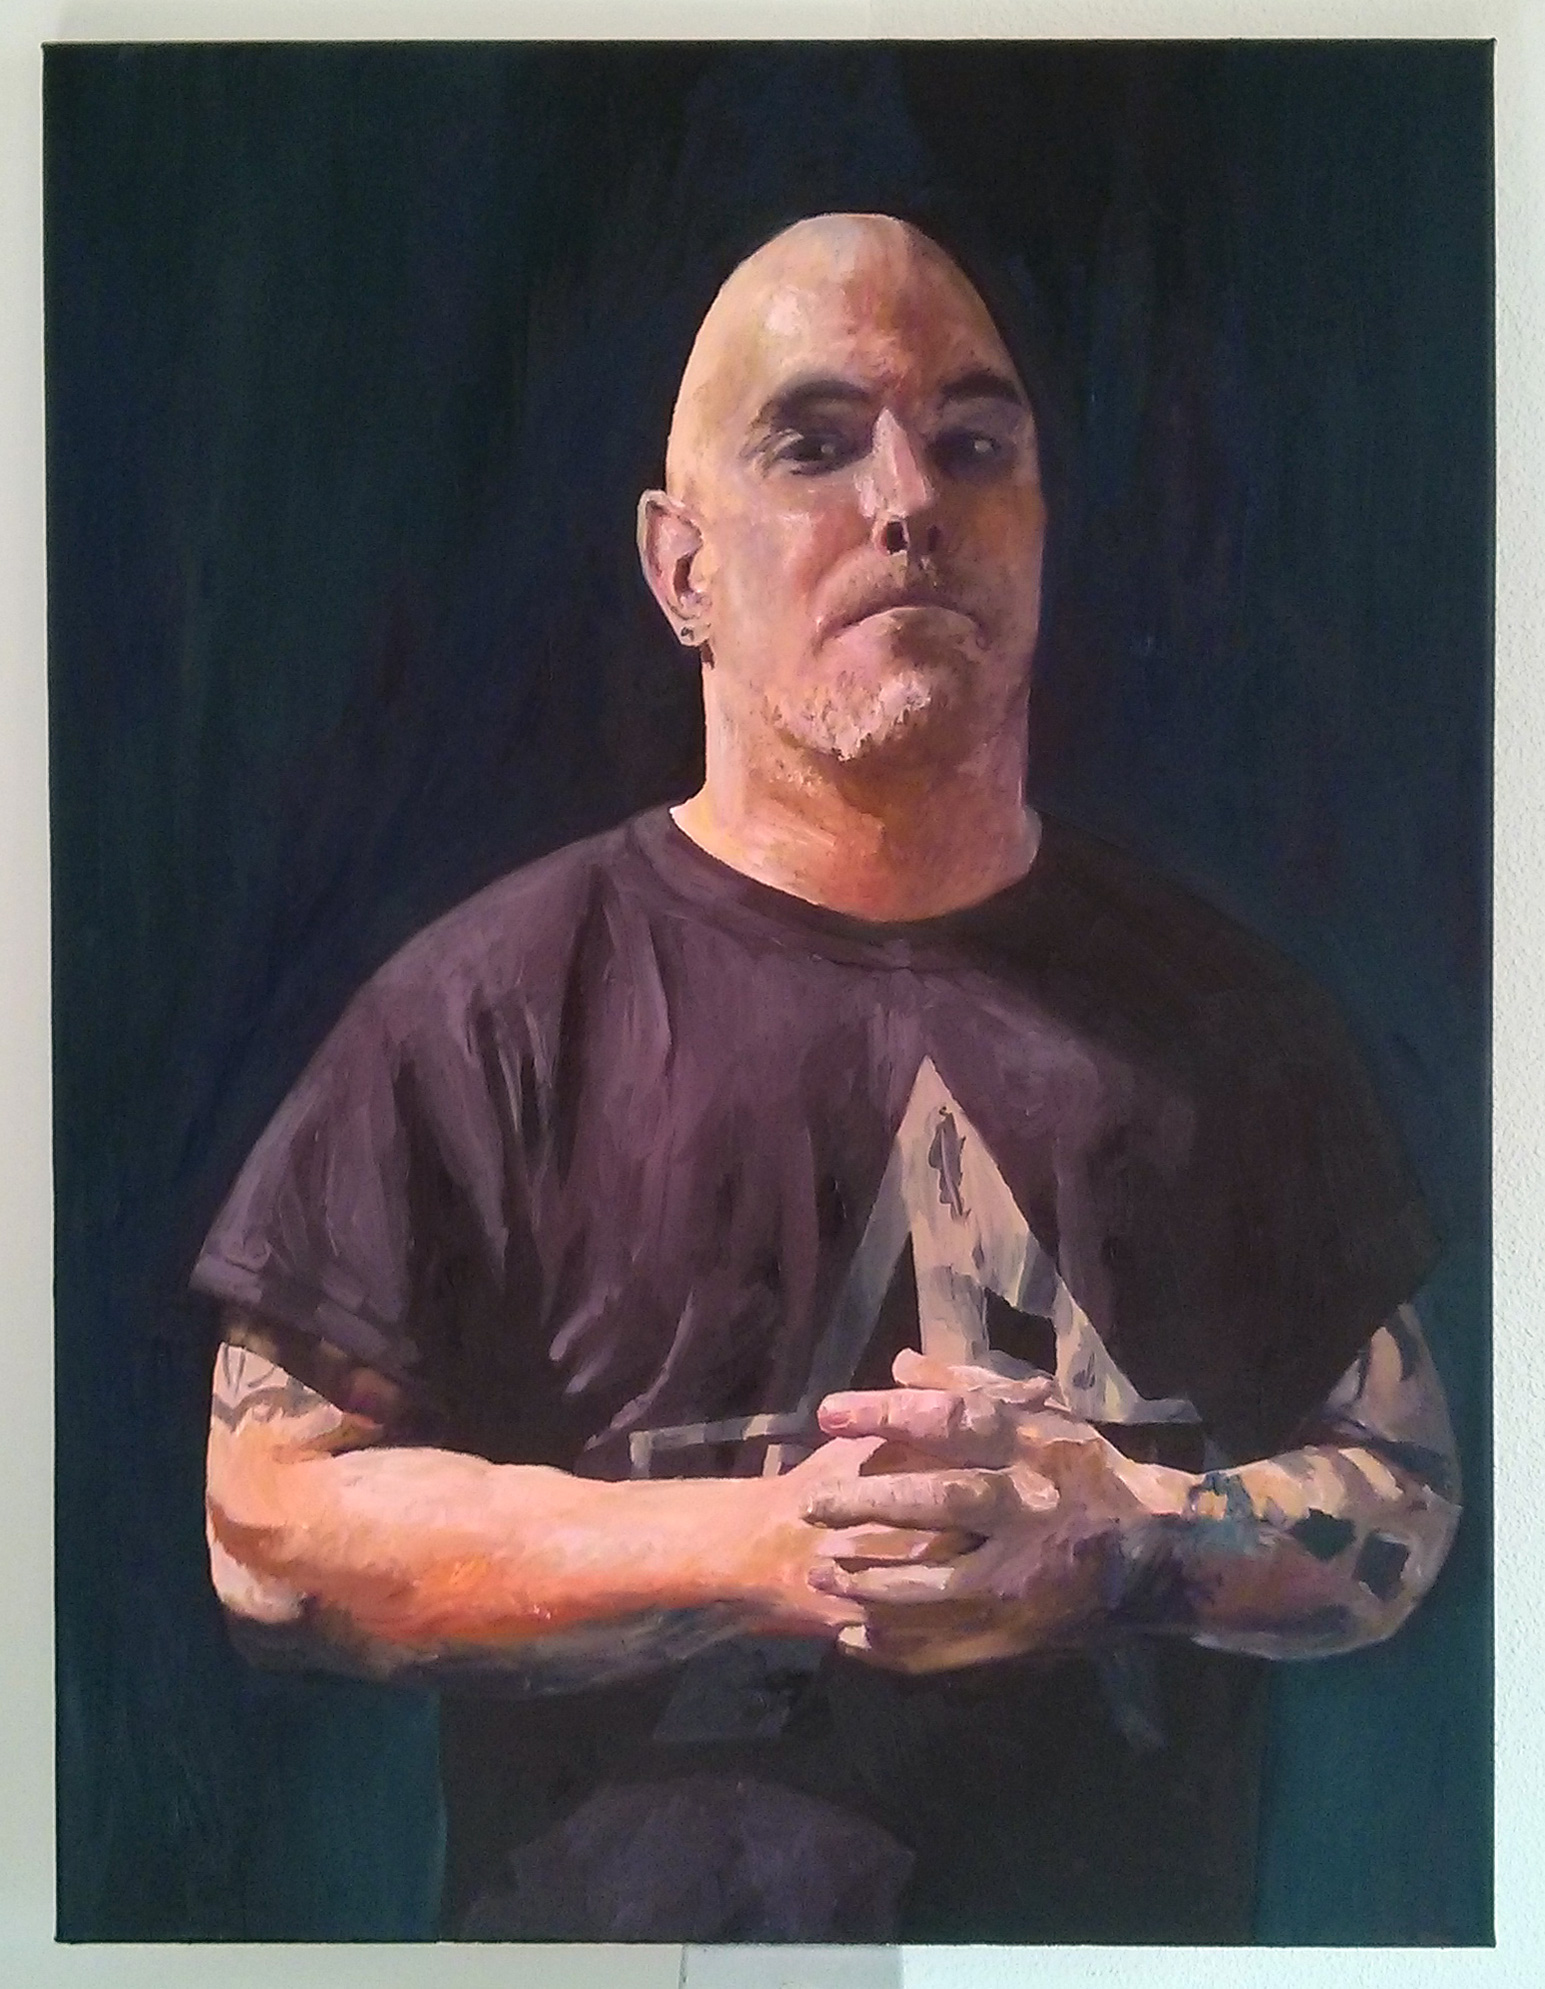 ‘Matt in Arkham T-shirt’ by Mata Haggis, 2013. Oil on Canvas. 60x80cm